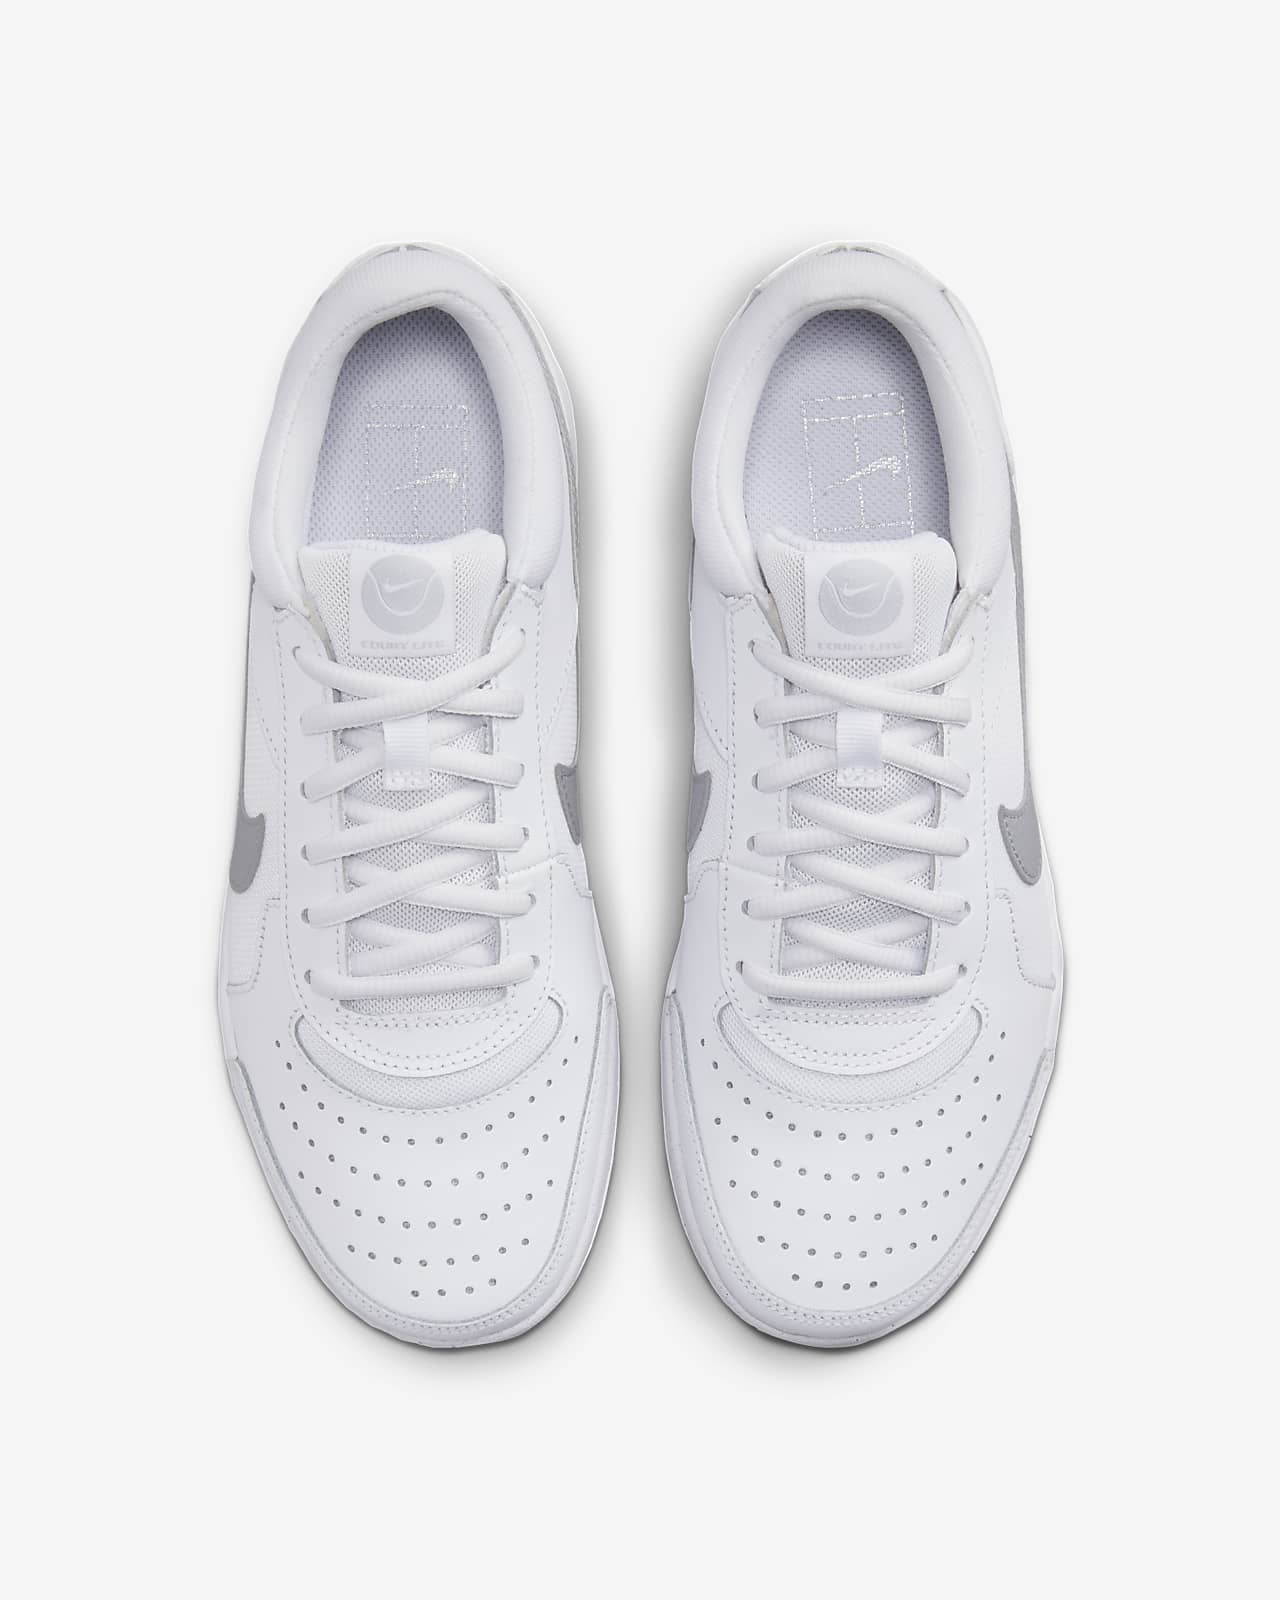 NikeCourt Air Zoom Lite 3 Womens Tennis Shoes